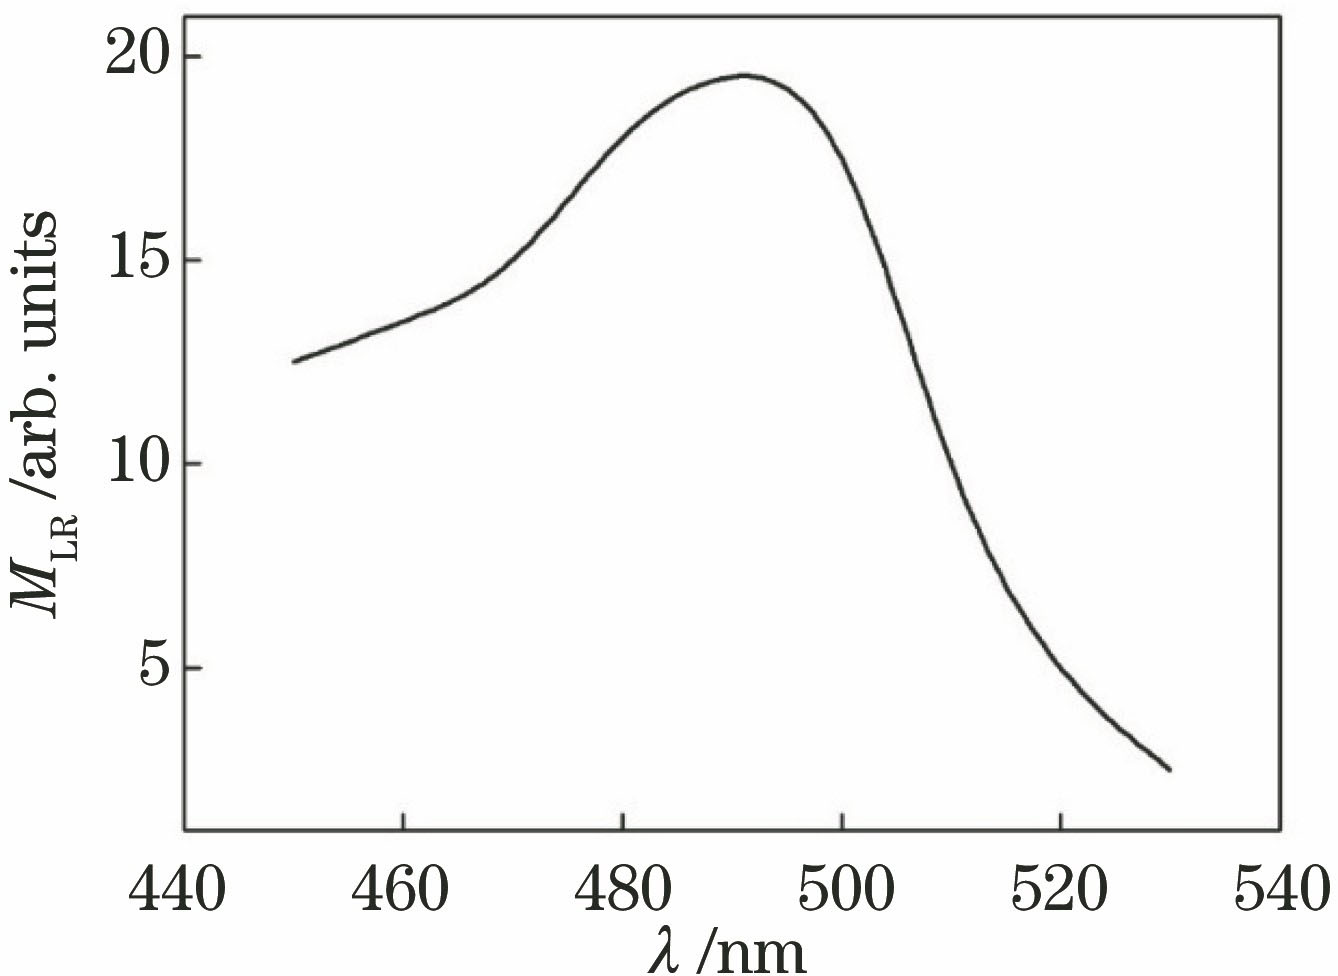 Relationship between LR generation rate MLR and light wavelength